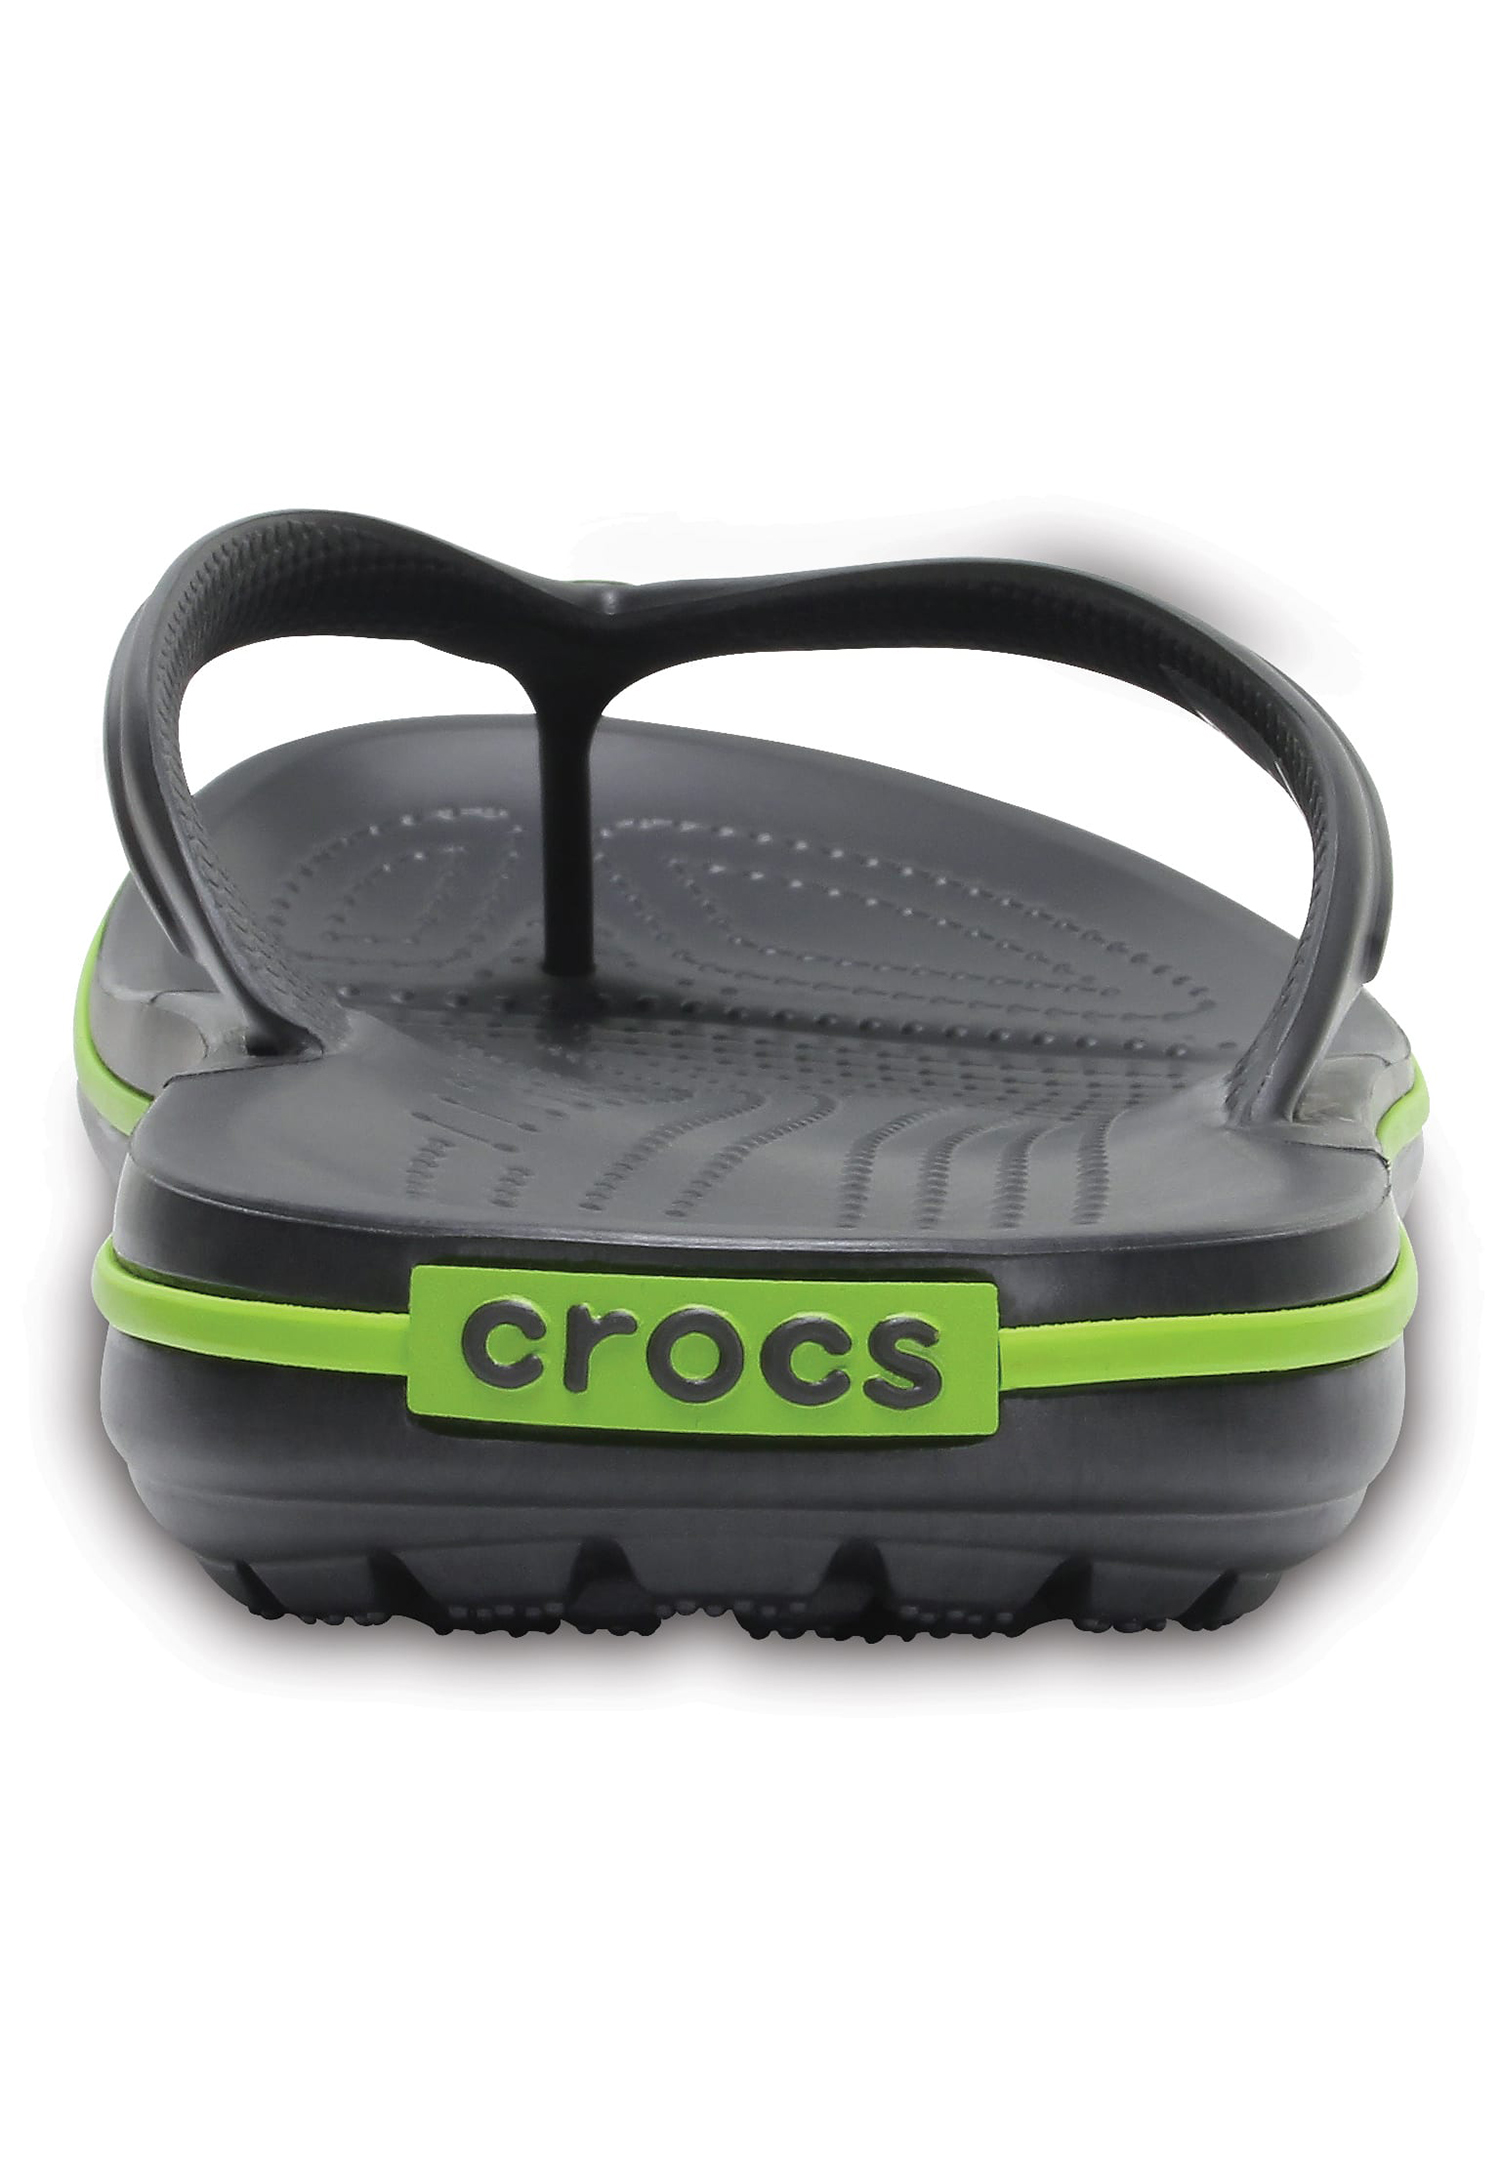 Crocs Crocband Flip Unisex Sandale Zehentrenner Badelatsche 11033 grau